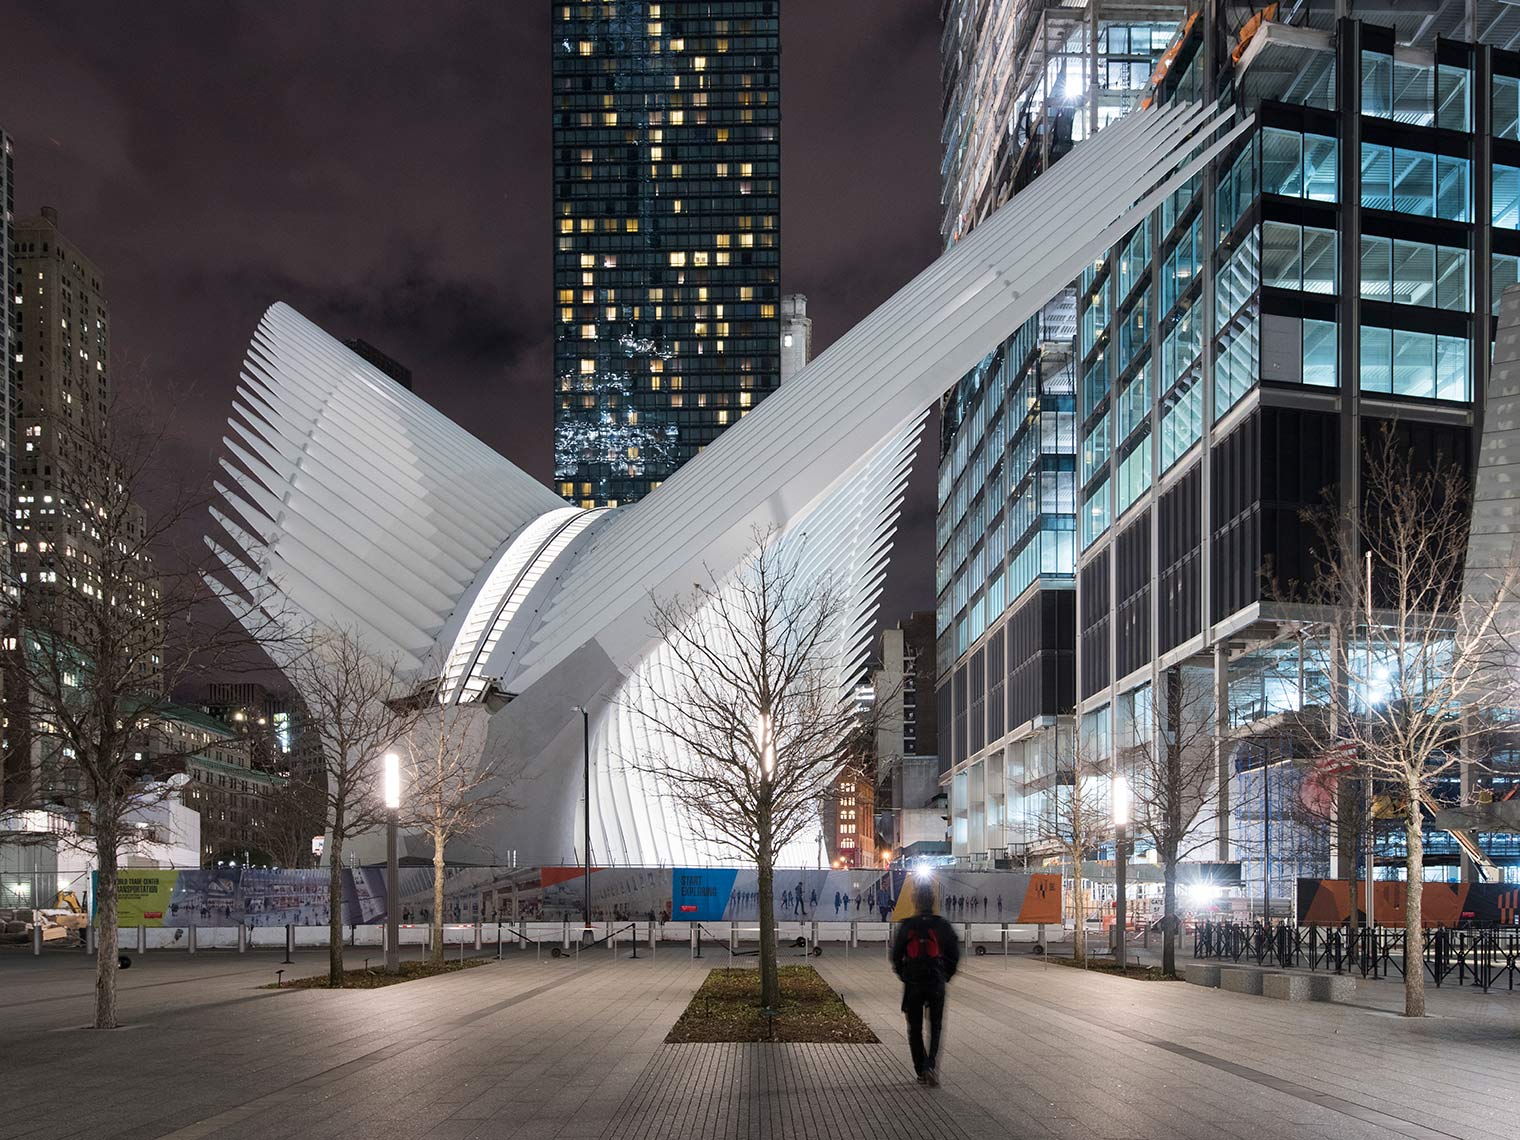 WTC Transportation Hug designed by Santiago Calatrava